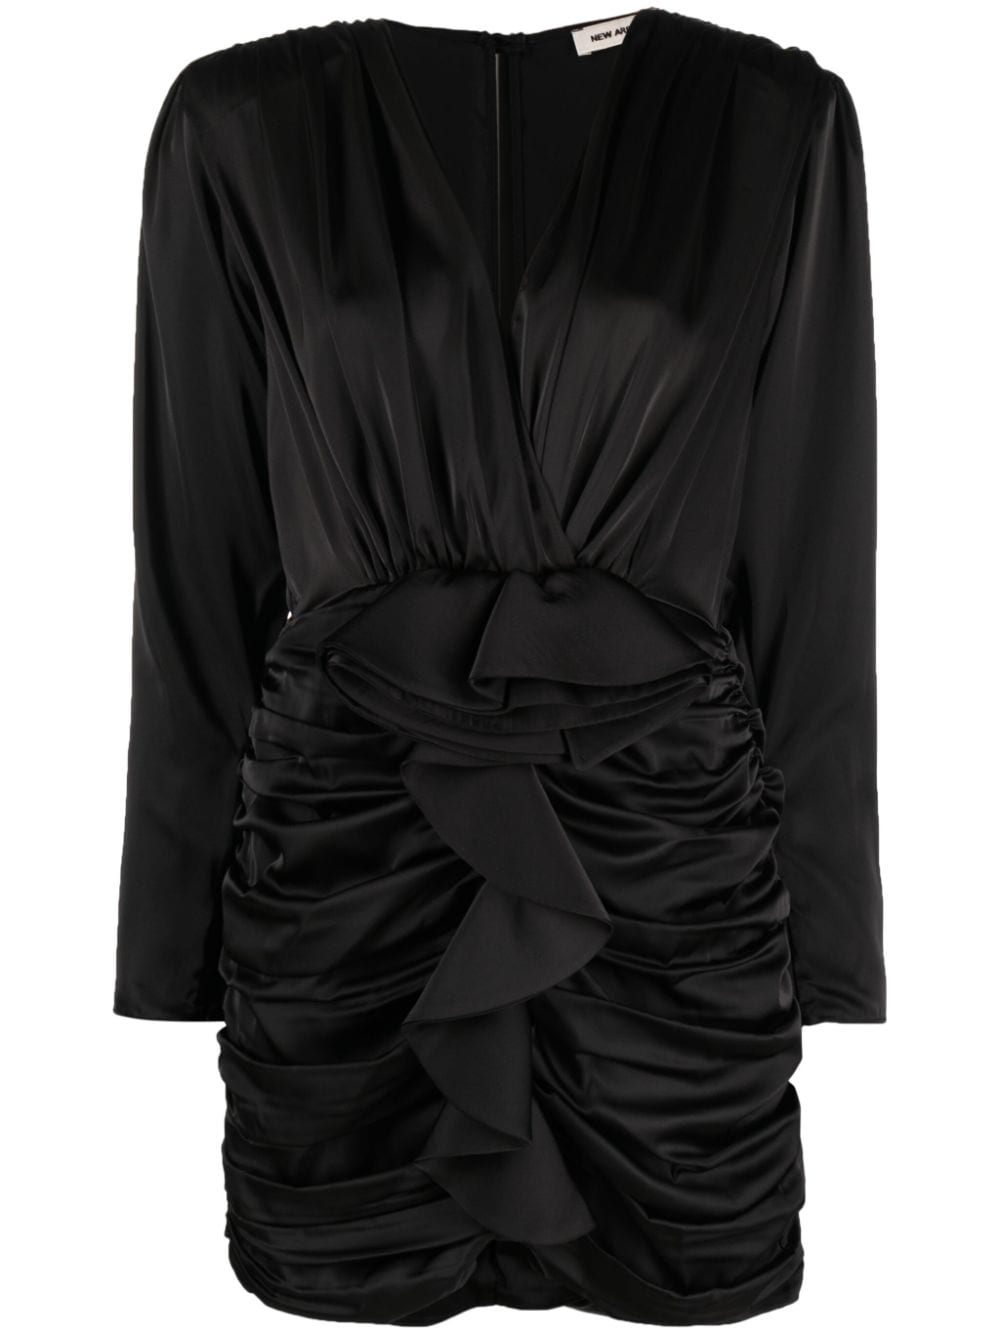 The New Arrivals Ilkyaz Ozel ruffle-detailing V-neck dress - Black von The New Arrivals Ilkyaz Ozel